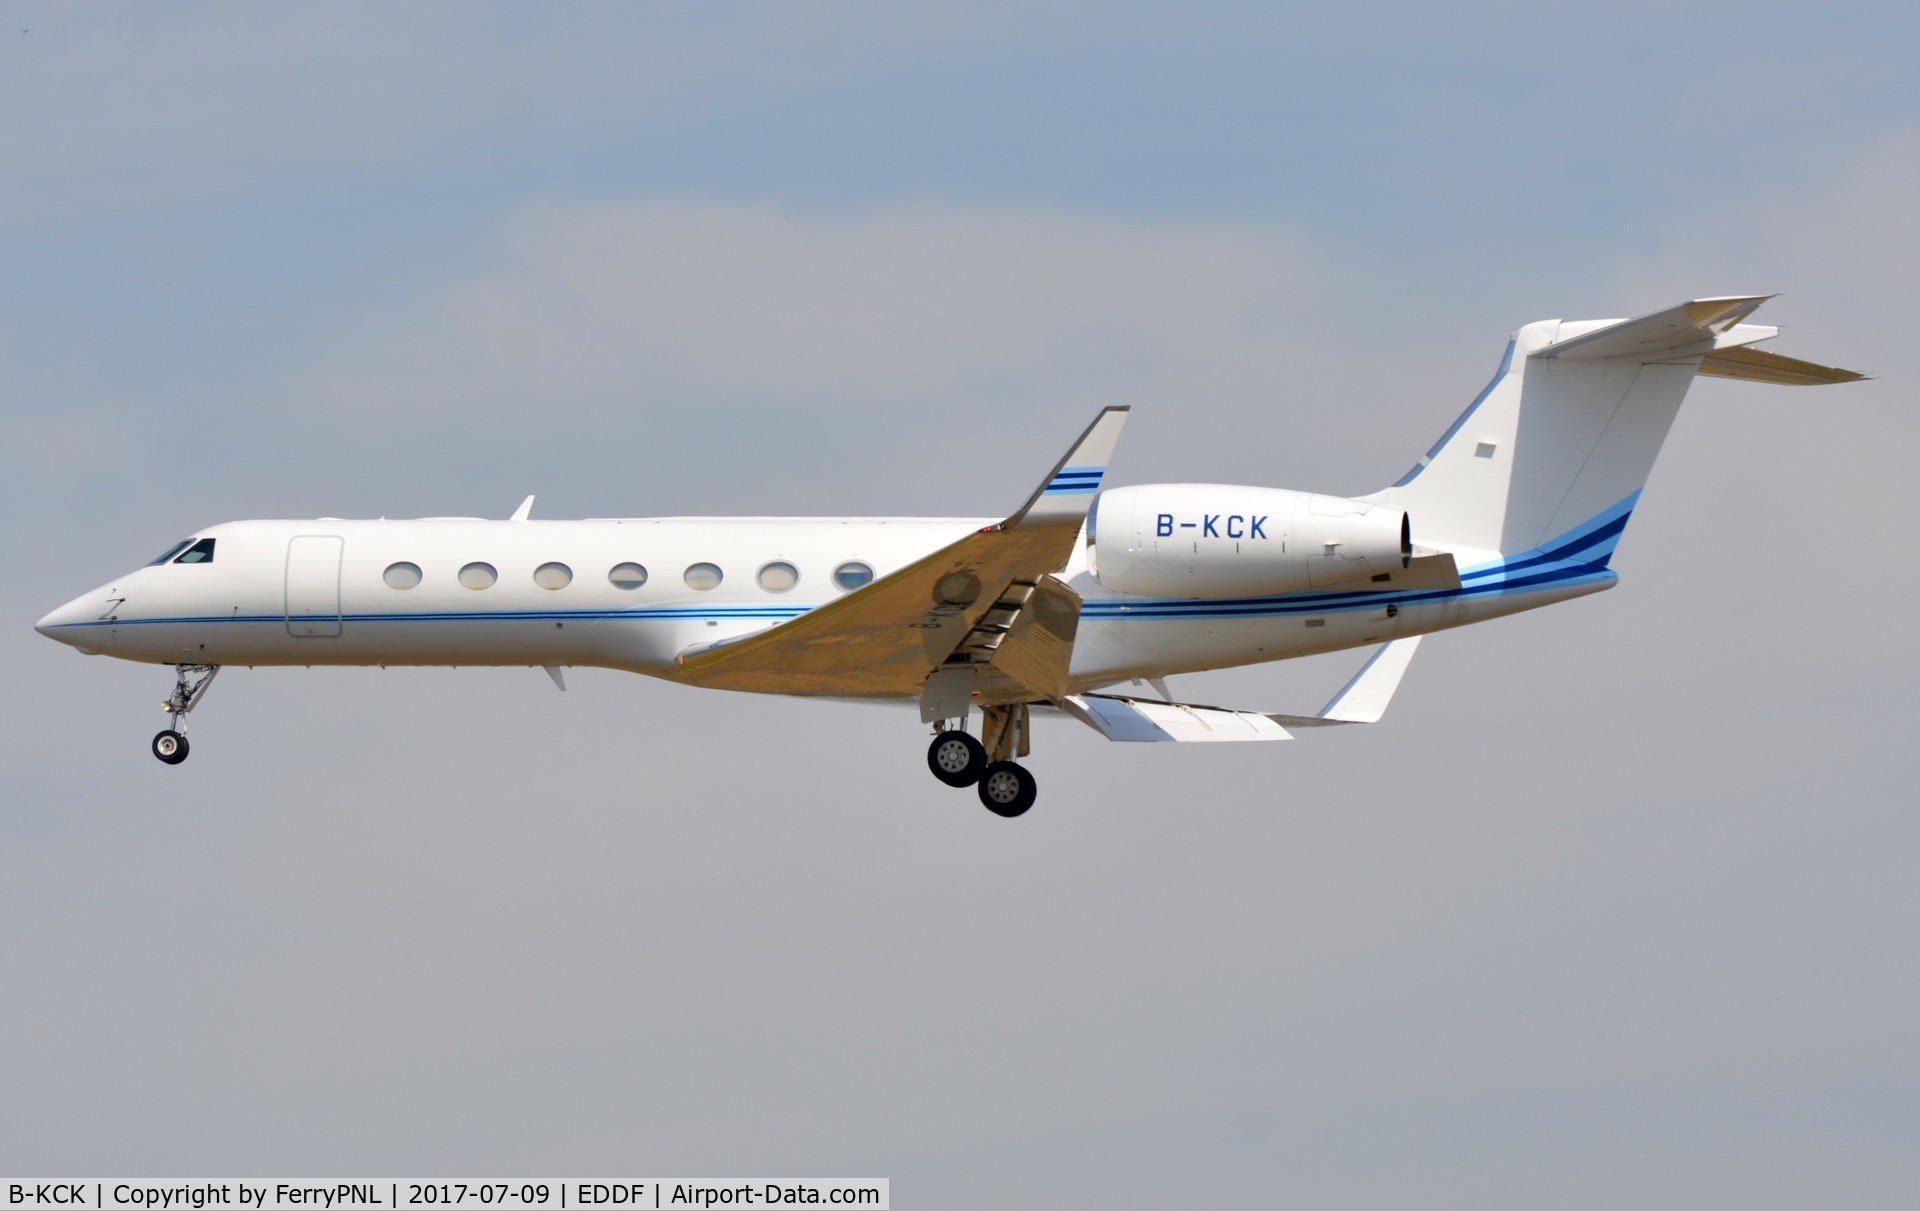 B-KCK, 2009 Gulfstream Aerospace GV-SP (G550) C/N 5228, Metrojet G550 arriving in FRA